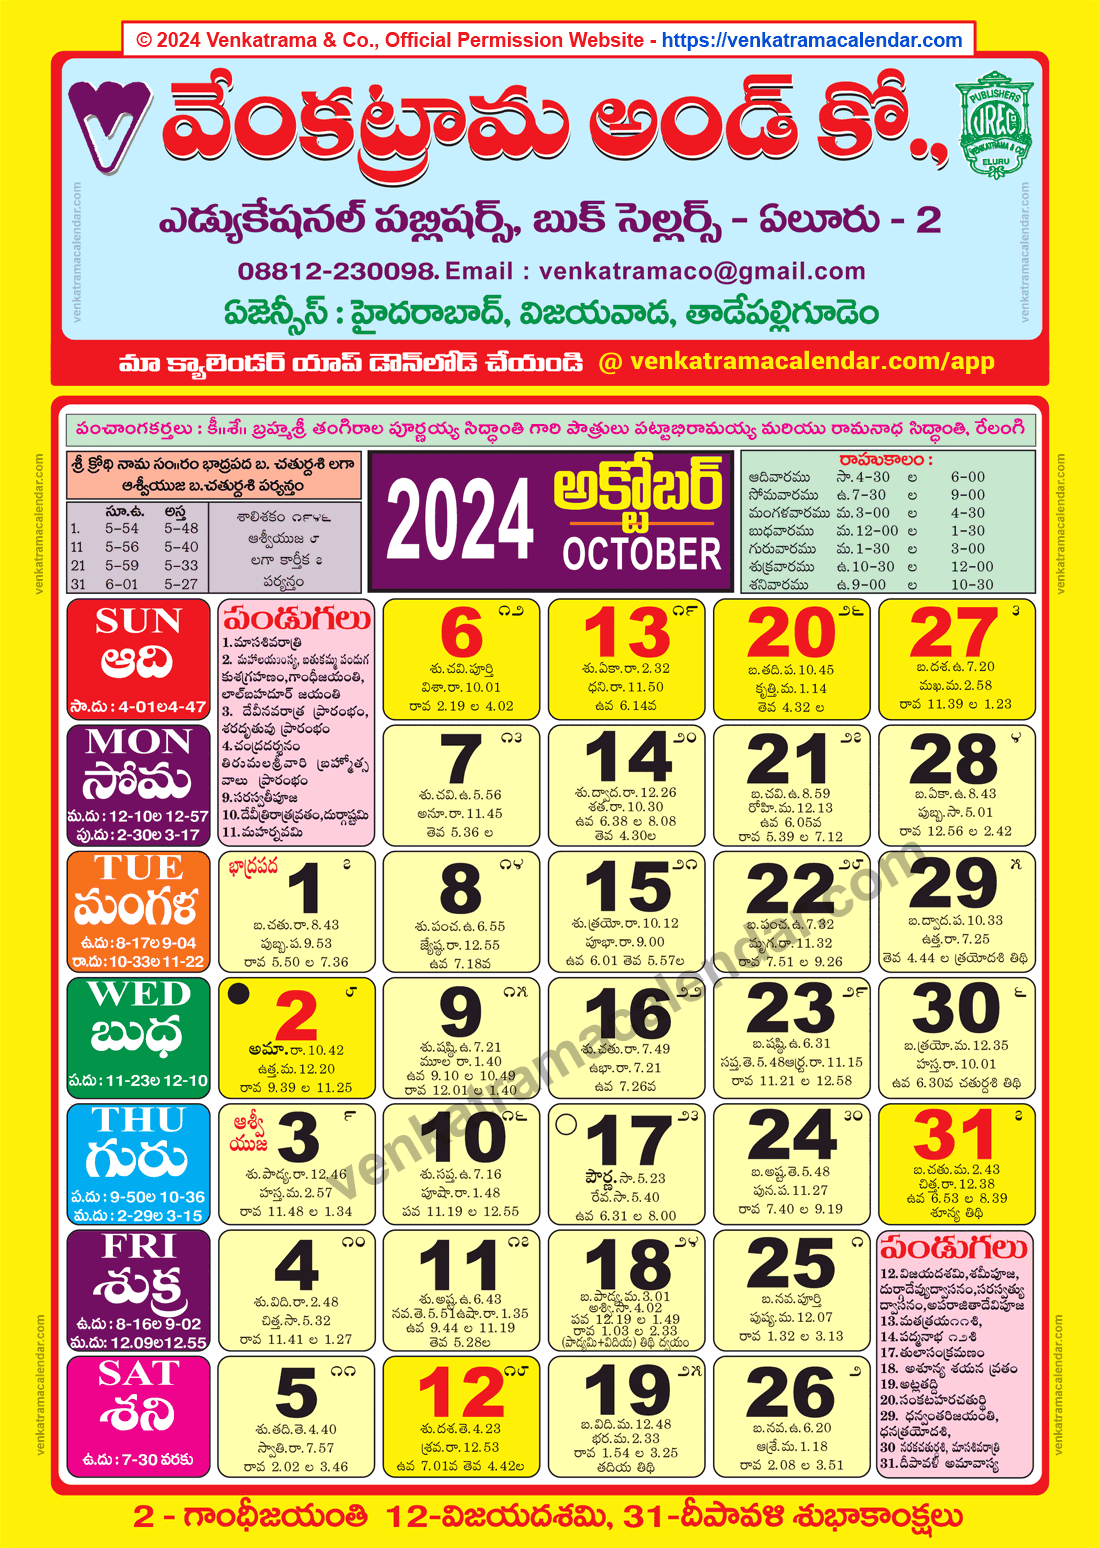 Venkatrama Calendar 2024 October Venkatrama Telugu Calendar 2024